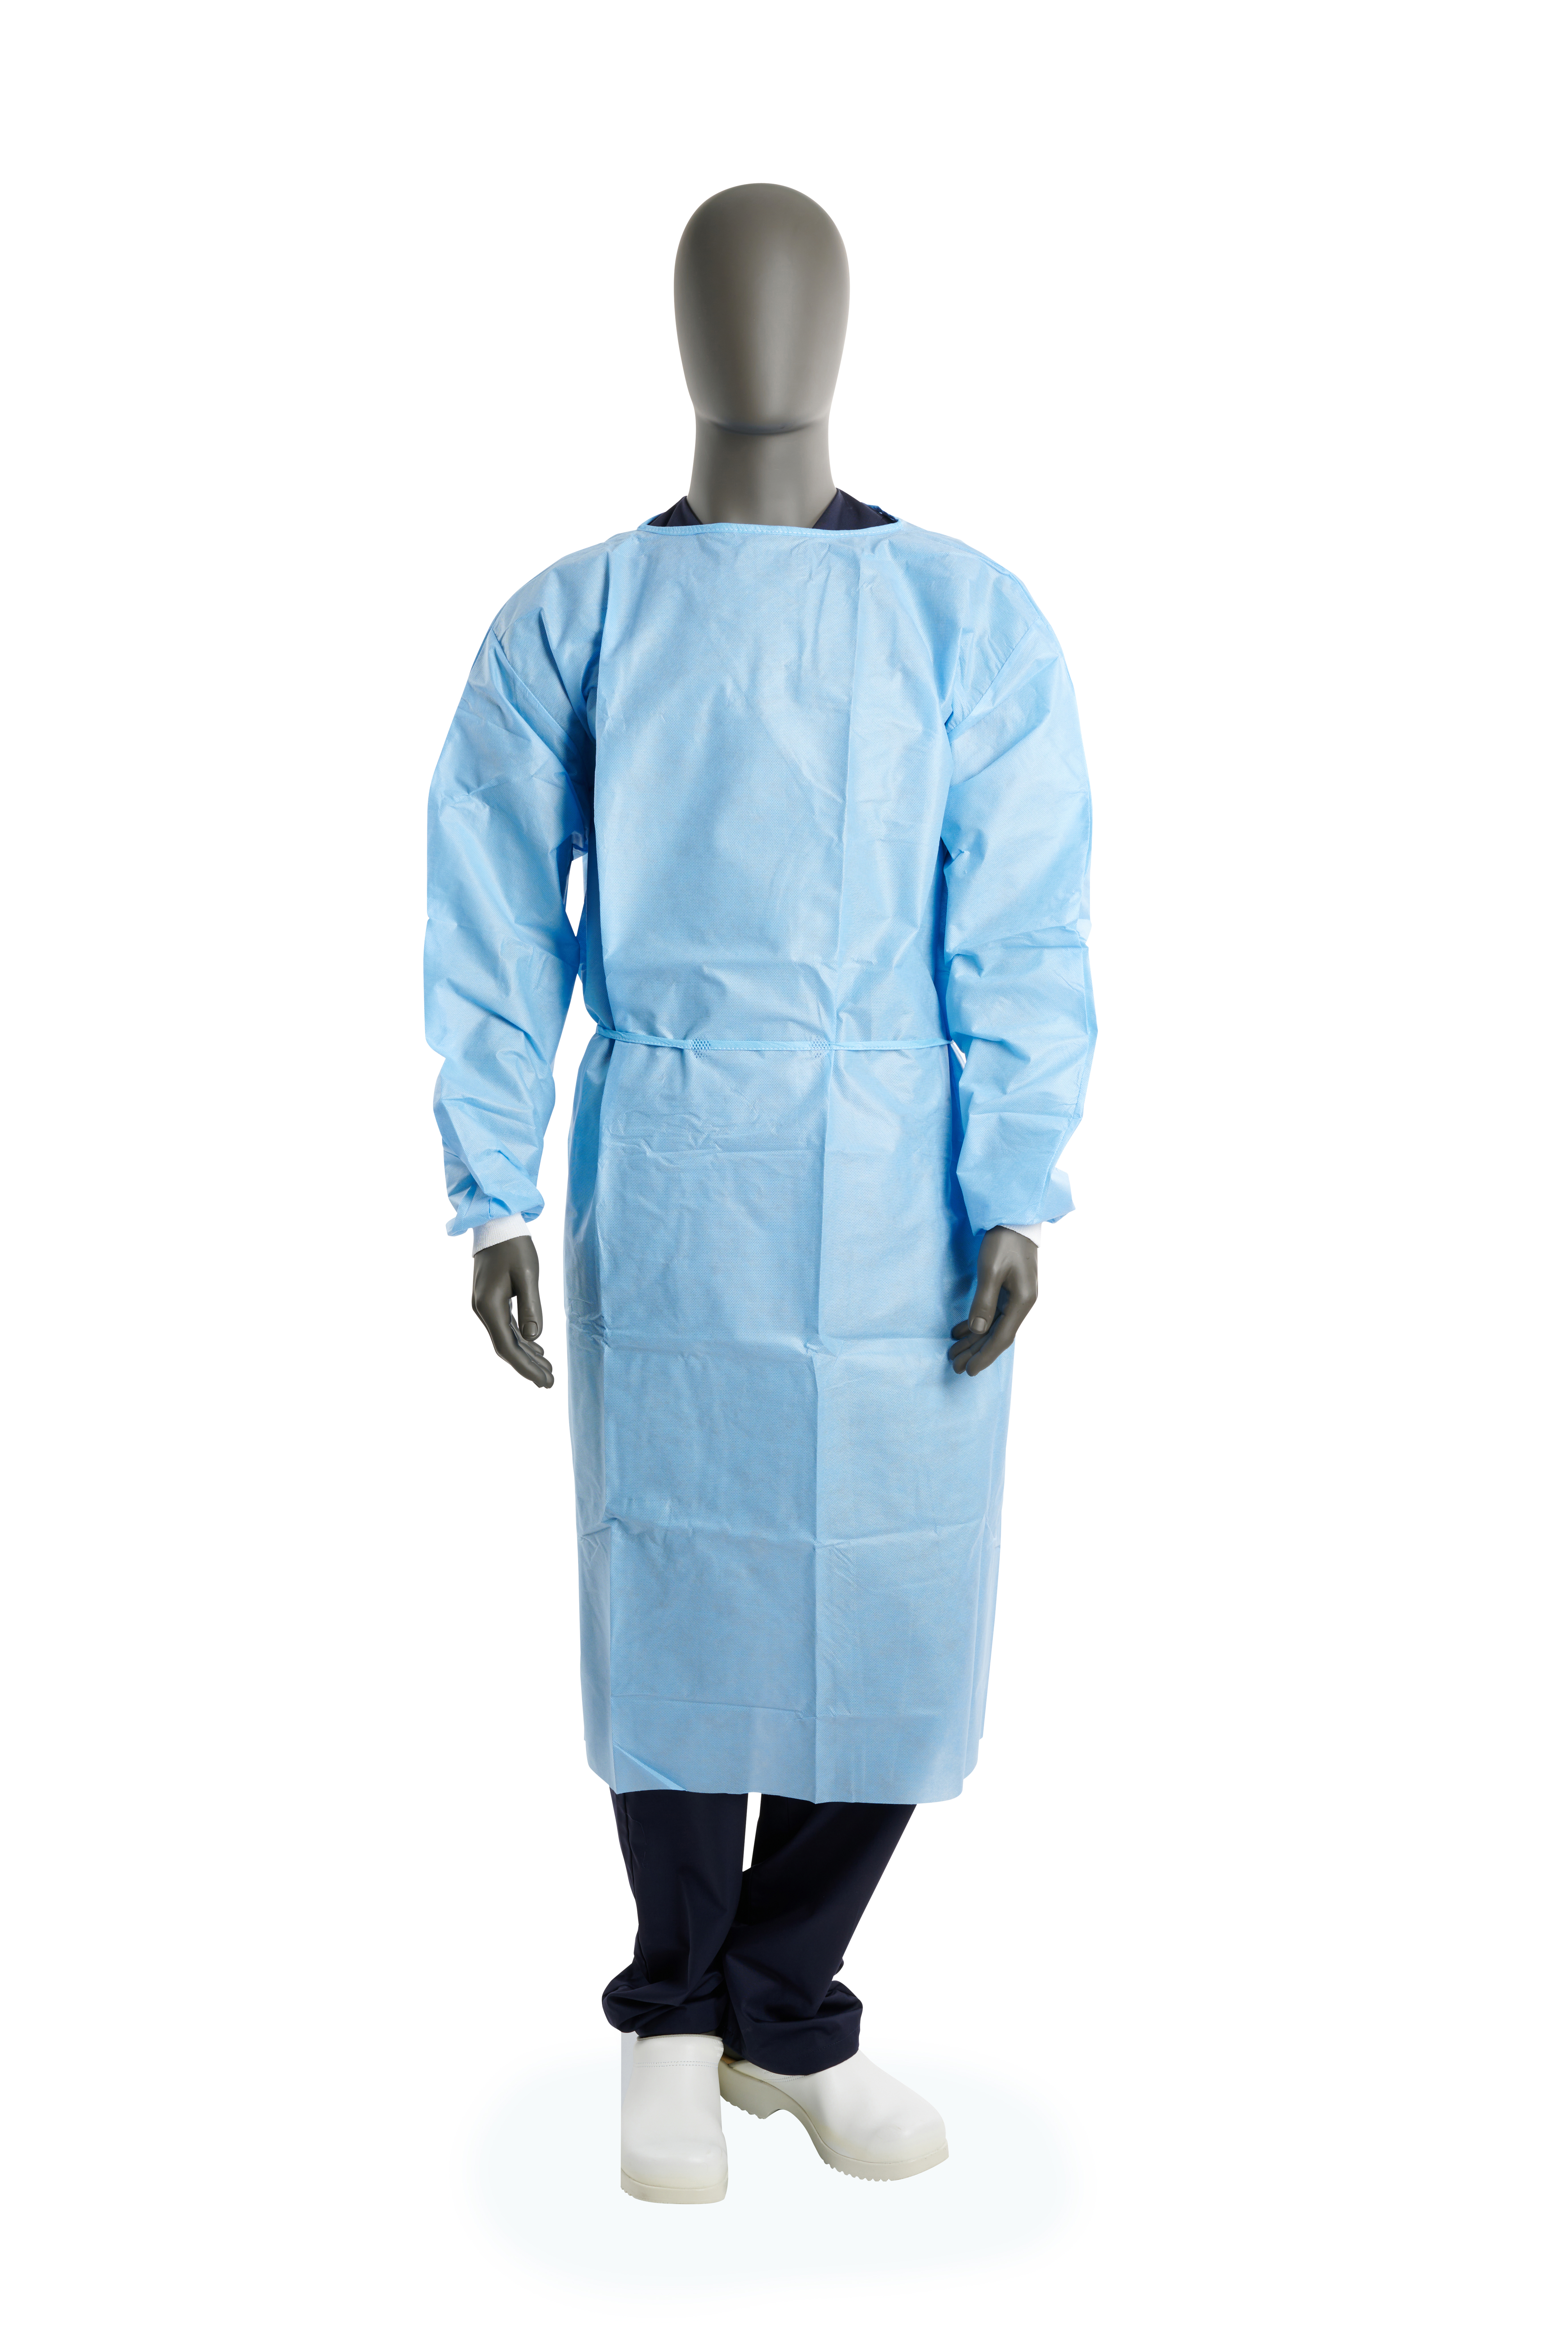 KRUTEX Basic operation coat 110 cm, sterile, S, 50/pk